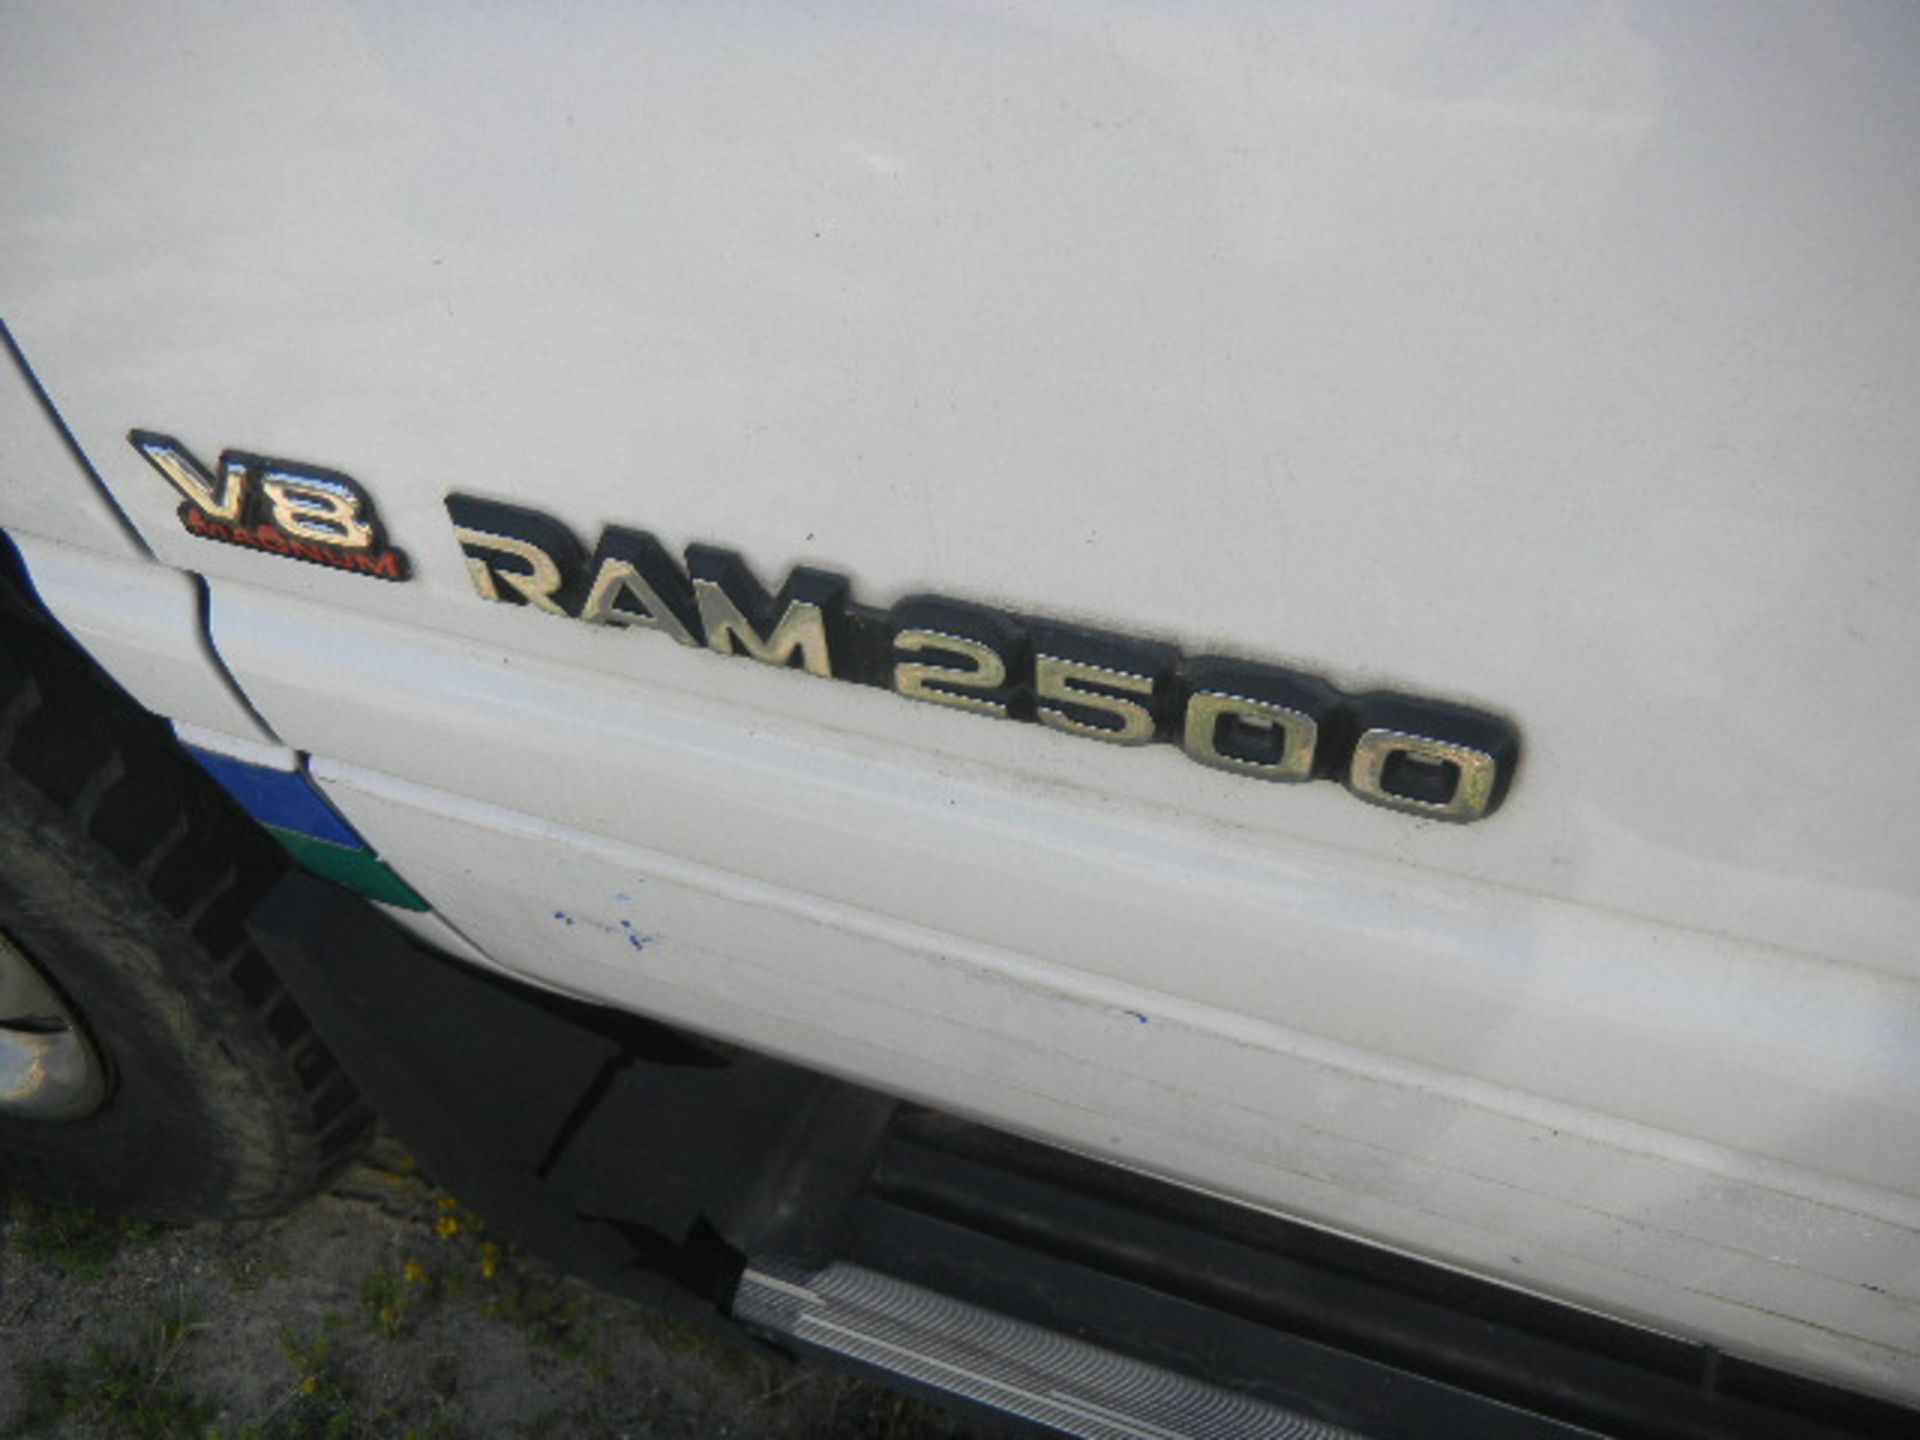 2000 Dodge Ram 2500 White Pickup w/Diamond Plate Fuel Tanks - Asset I.D.#482 - Last of Vin (276108) - Image 8 of 9